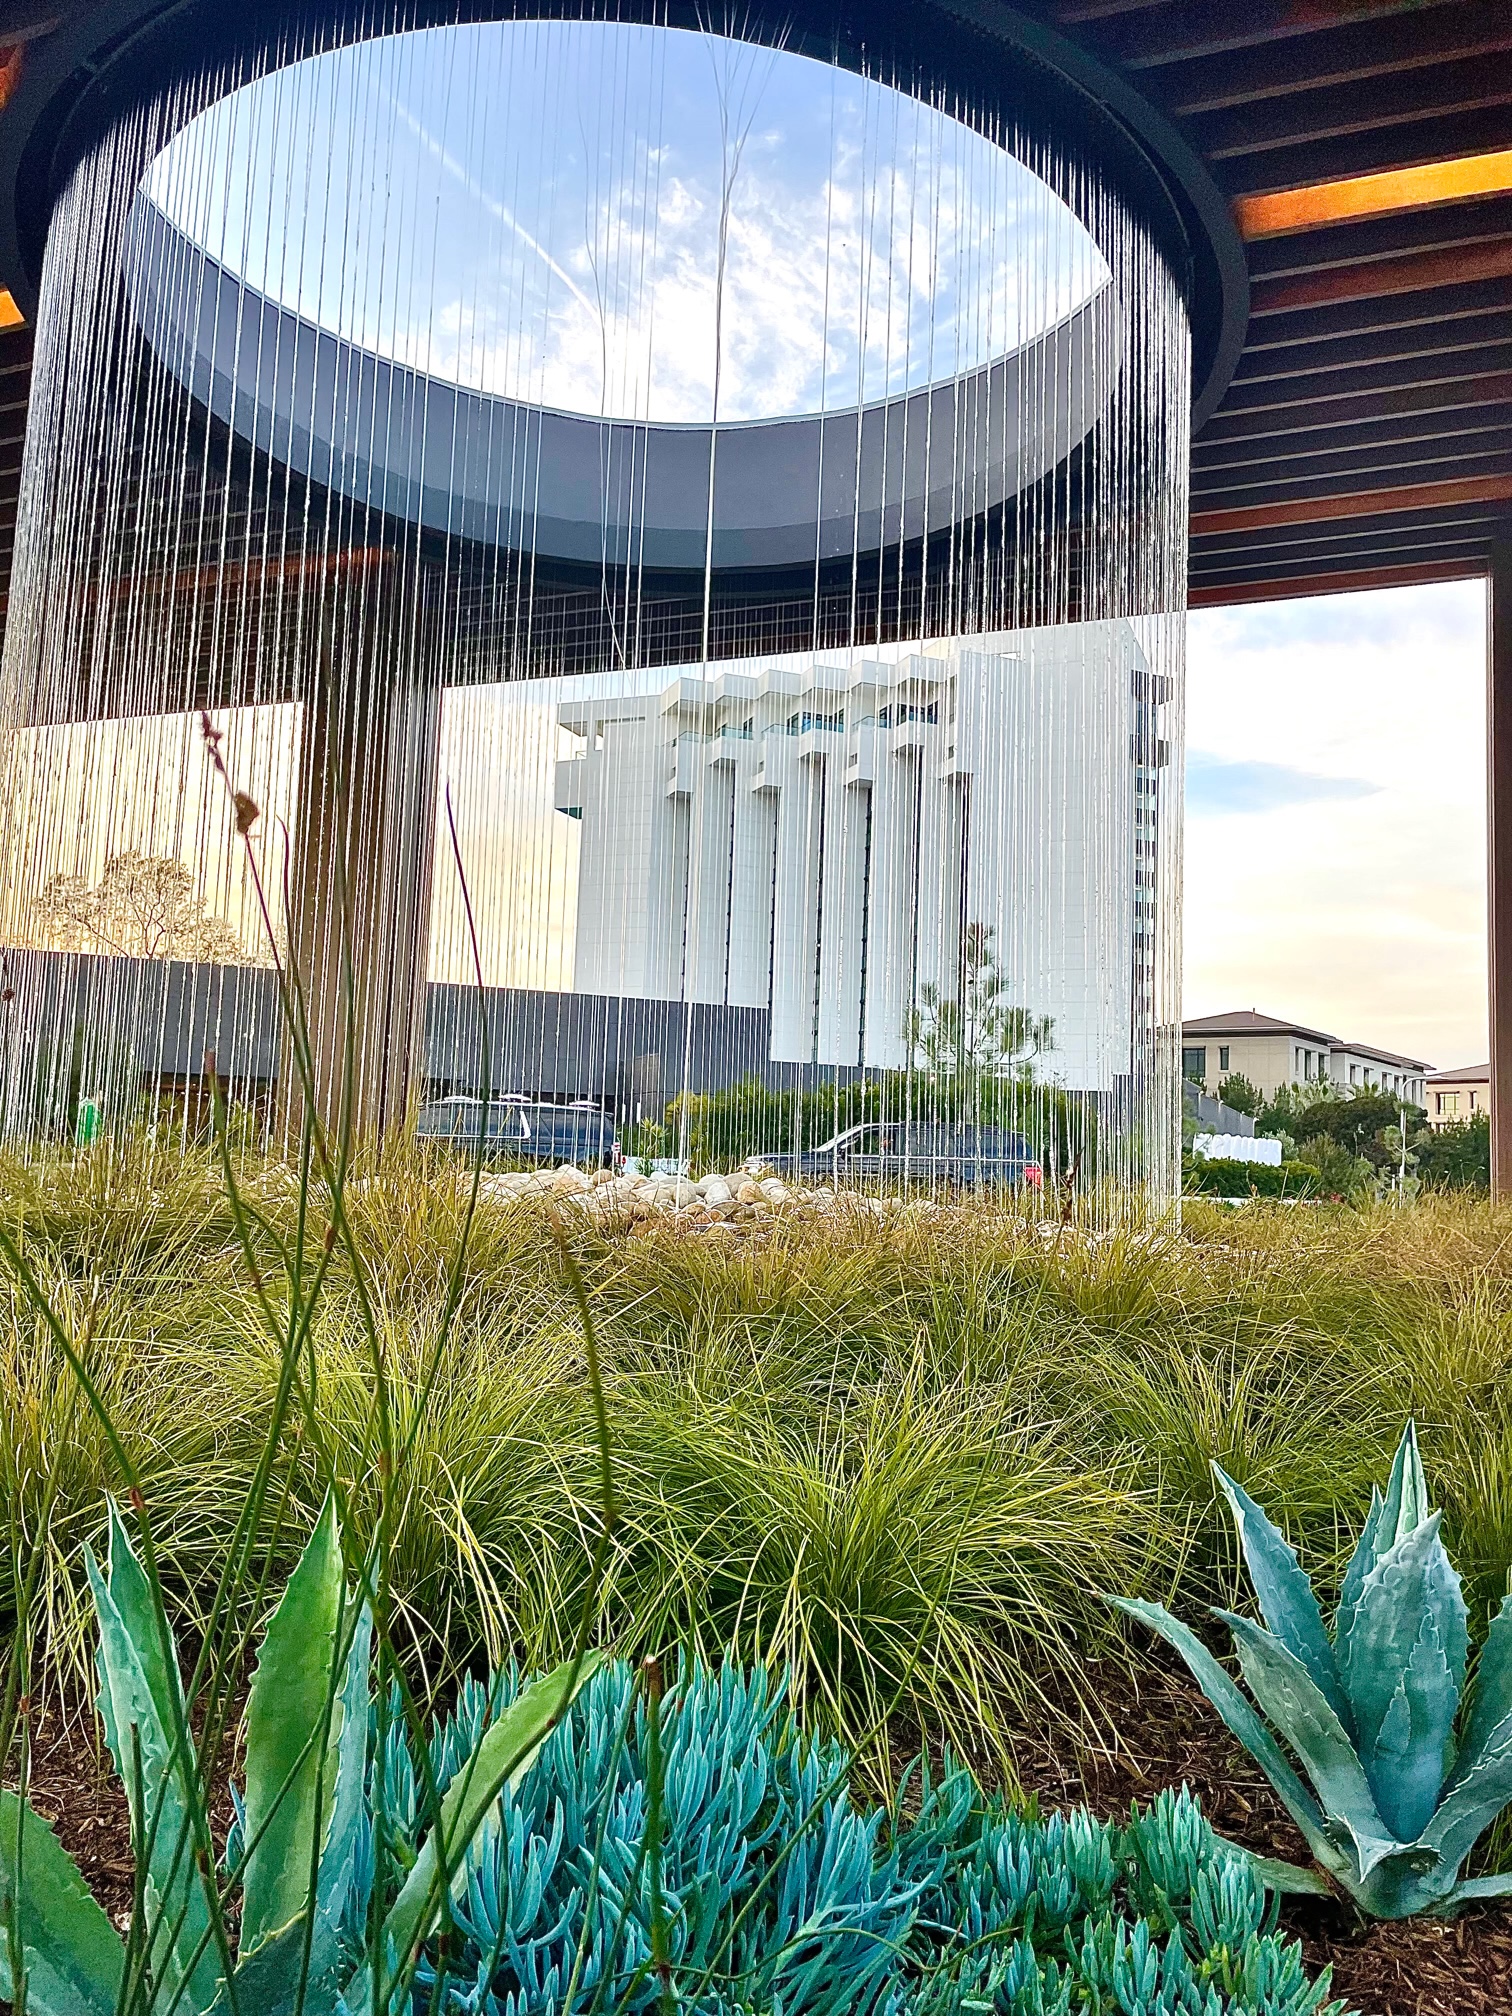 Water fountain in Newport Beach 